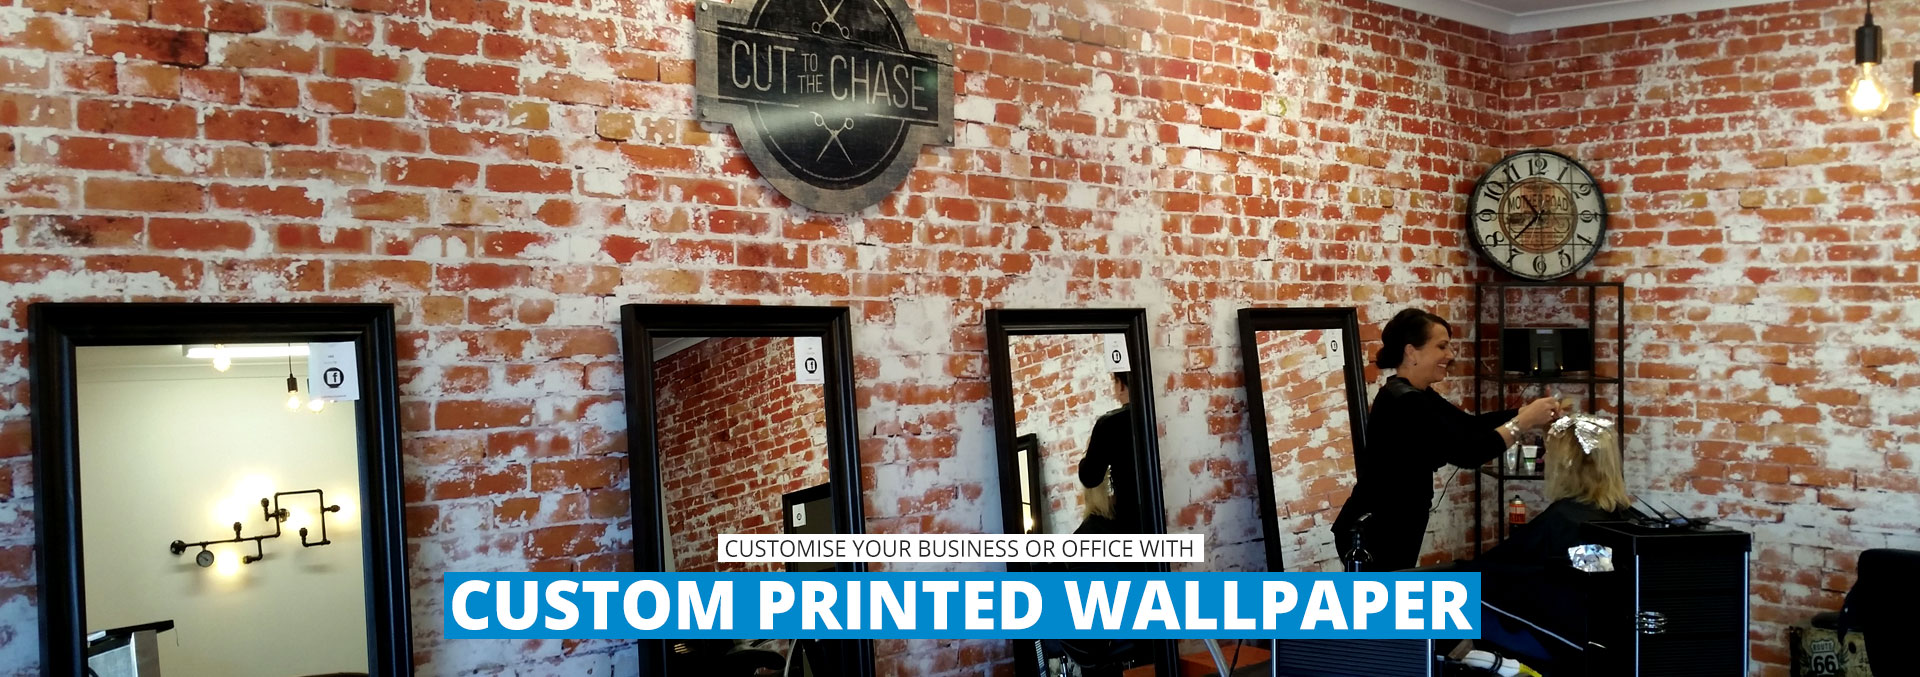 customprintedwallpaper